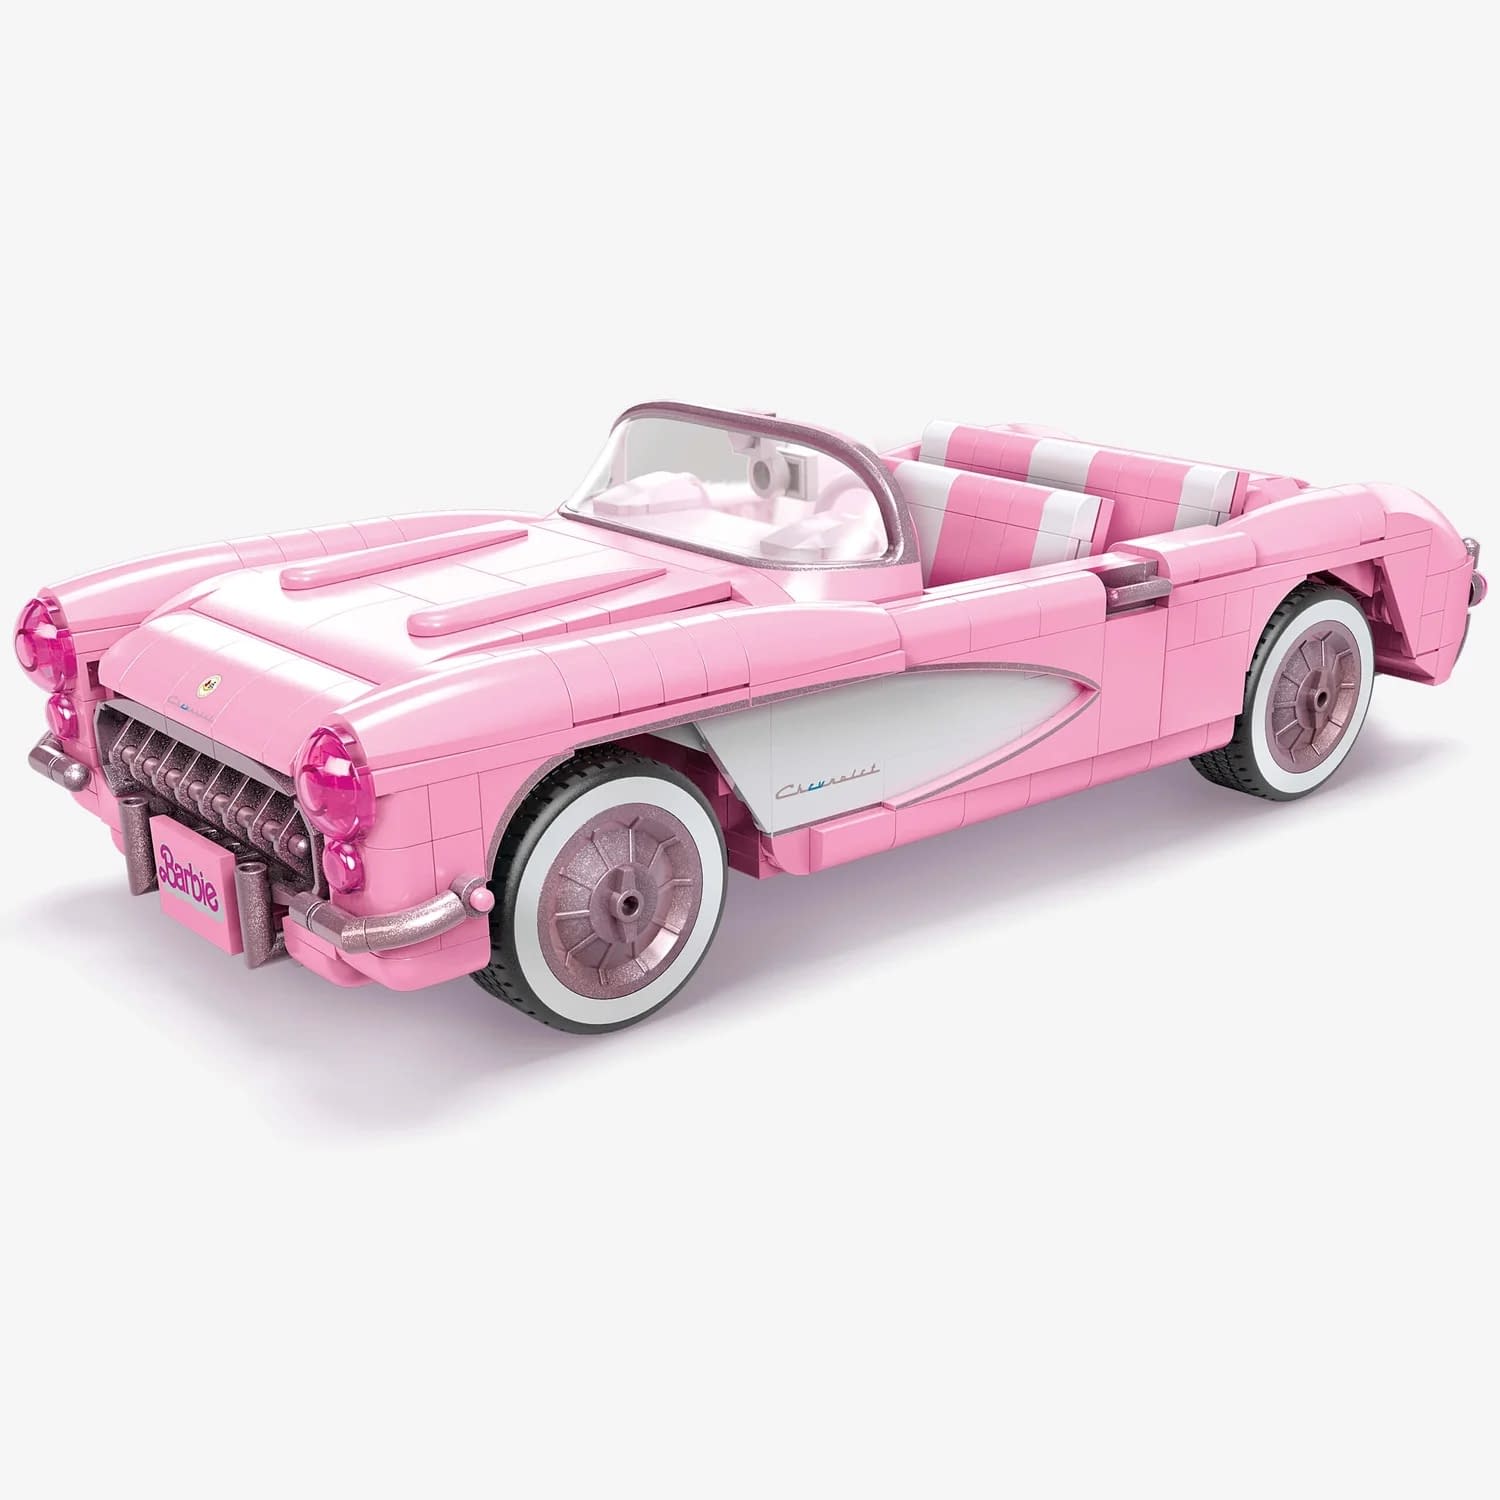 Mattel Drives in with MEGA Barbie The Movie '56 Corvette Stingray Set3